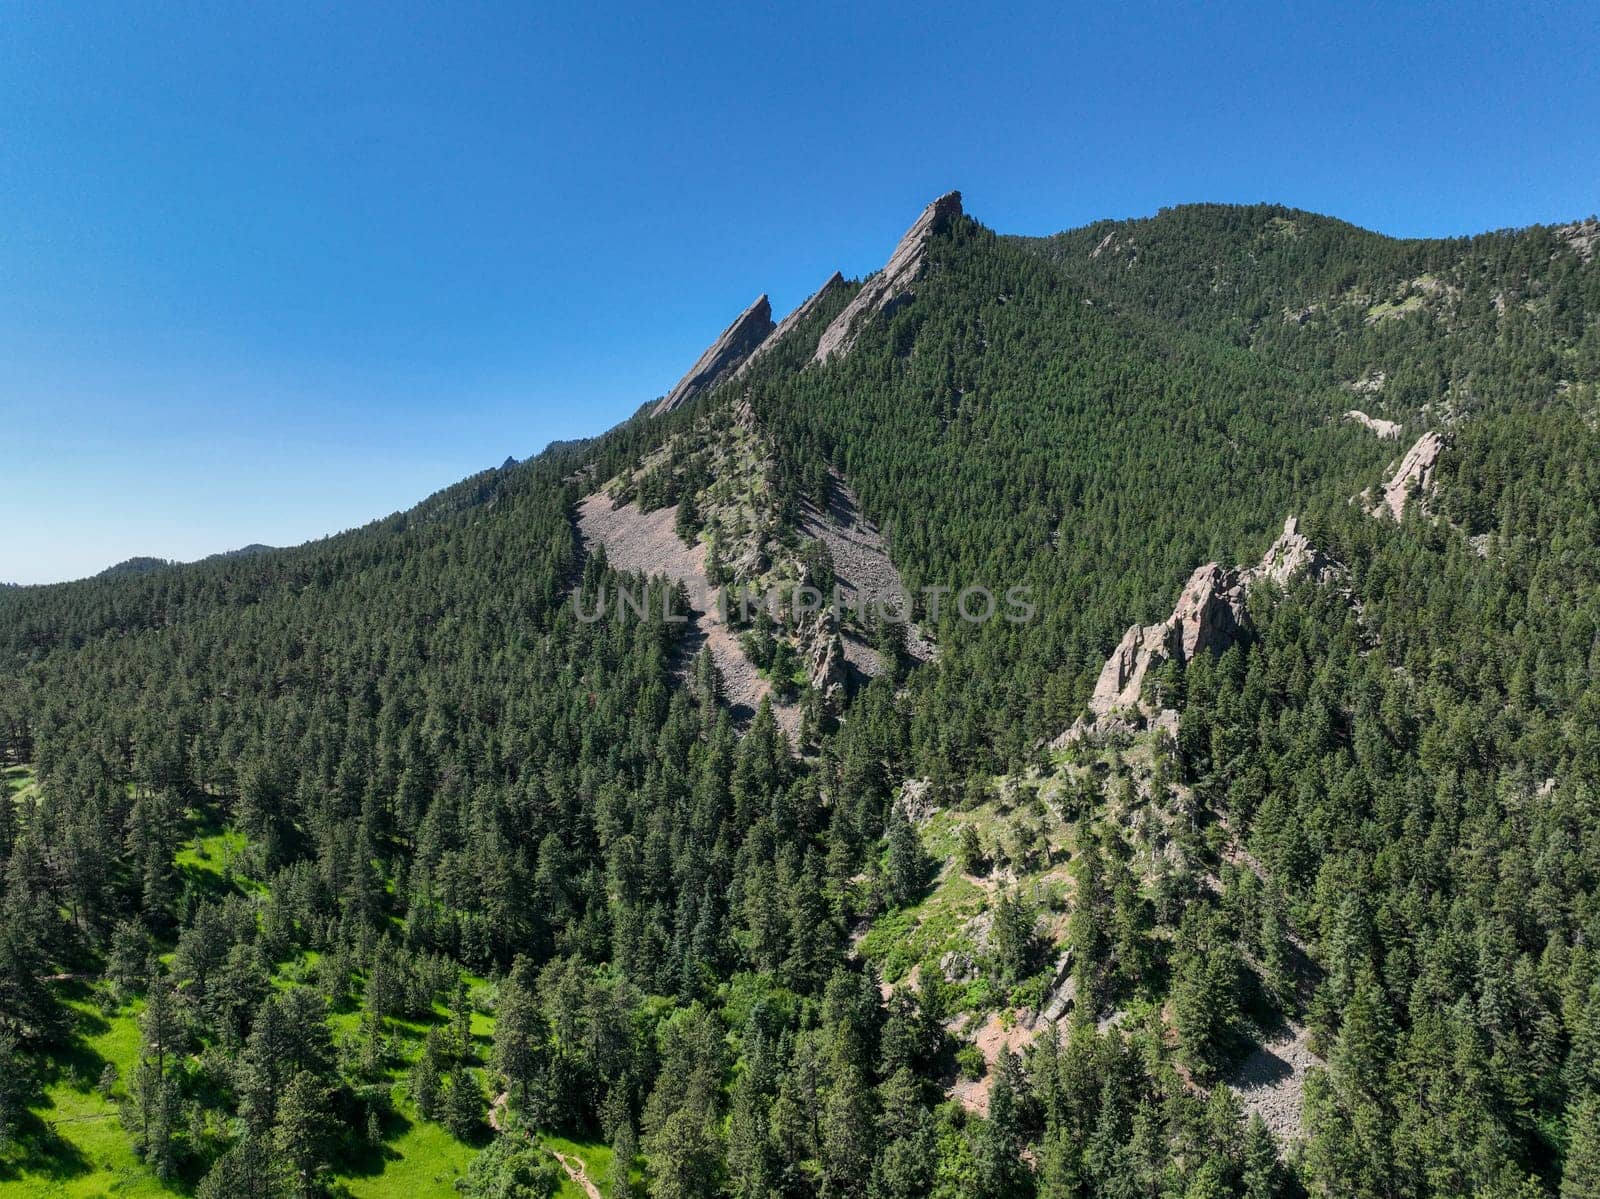 The Flatirons, rock formations at Chautauqua Park near Boulder, Colorado by Bonandbon